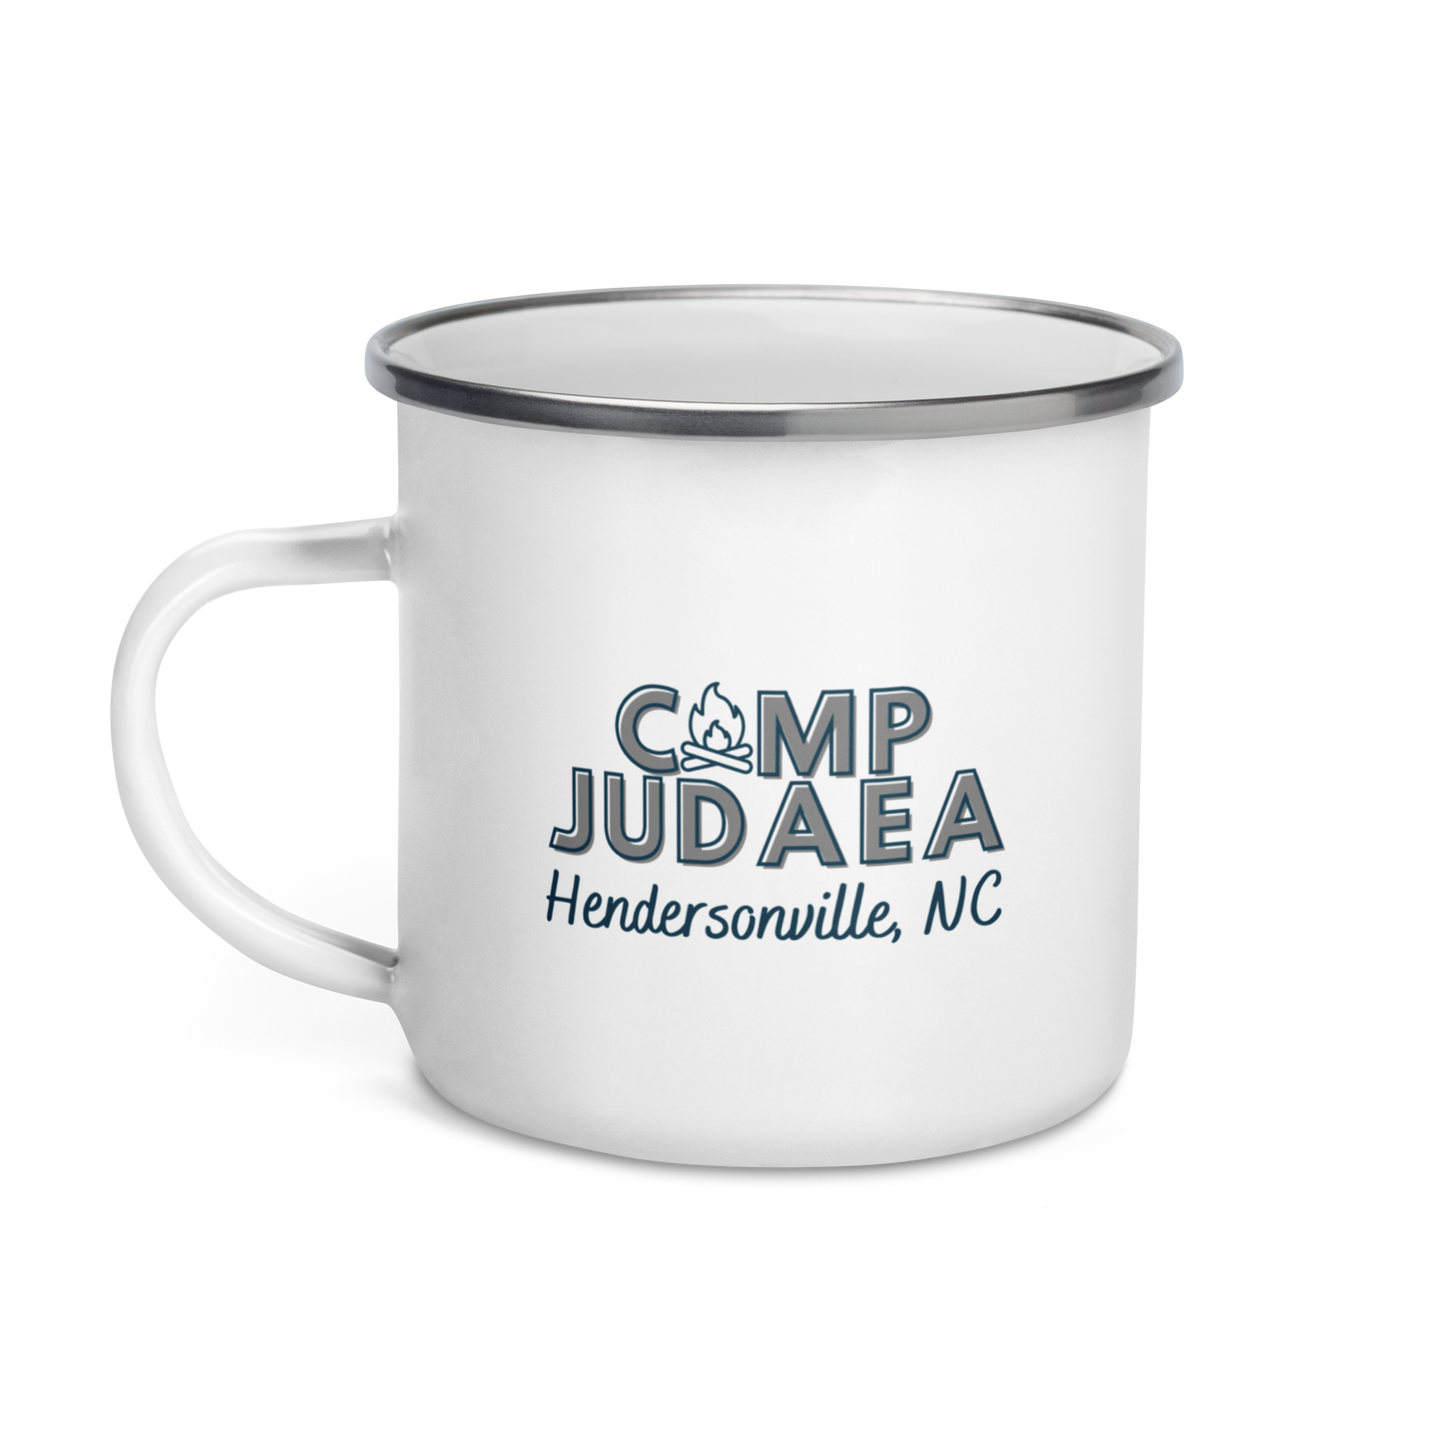 Personalized Camp Fire Enamel Mug